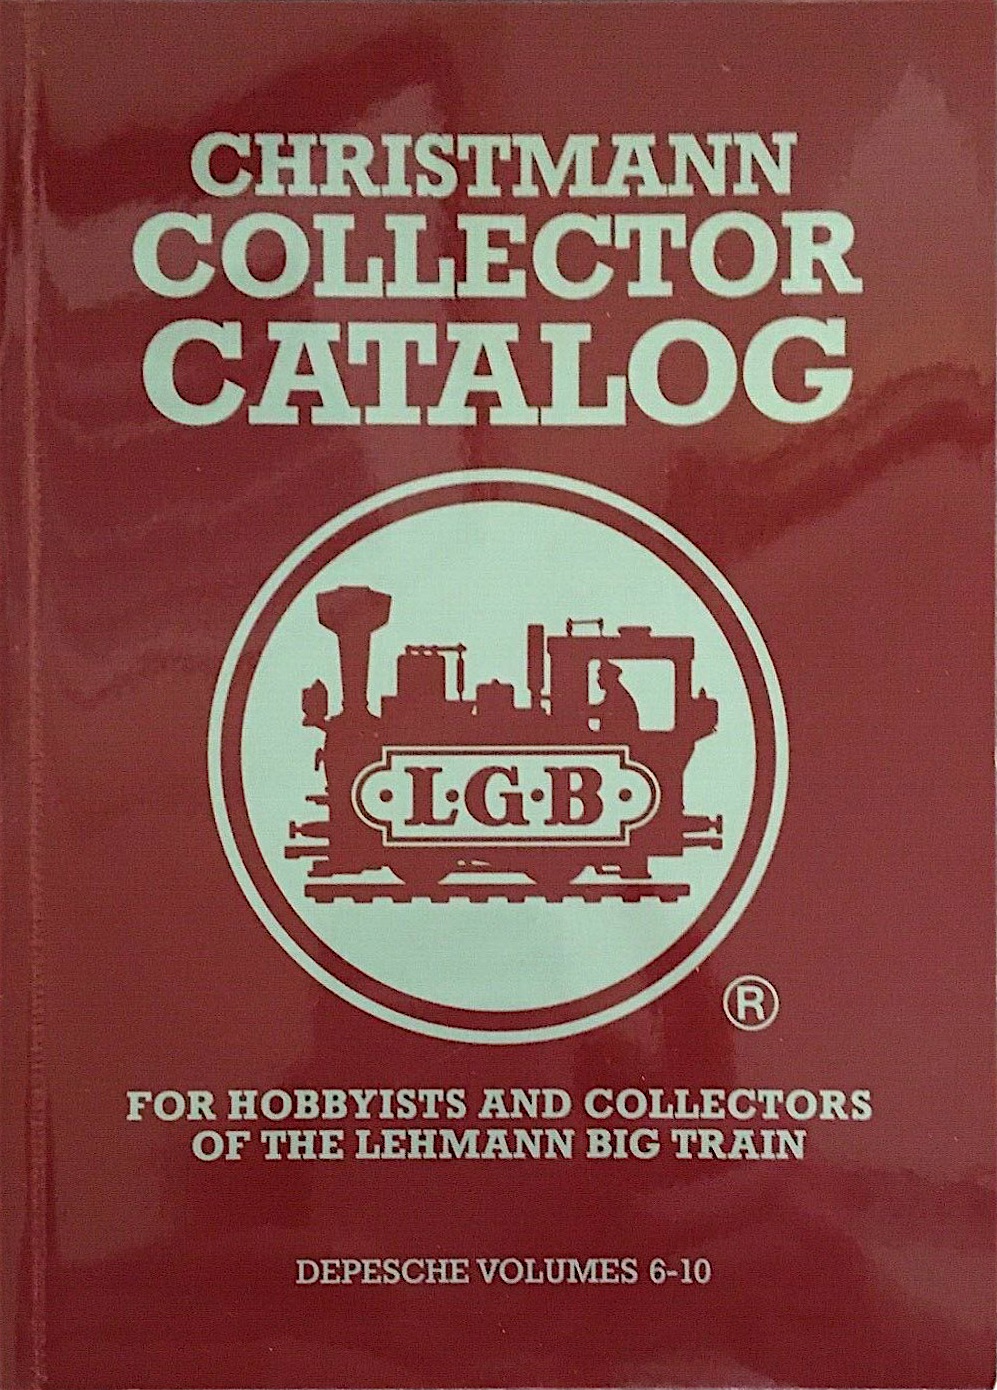 LGB Sammler Katalog (Collector Catalogue) - 1993 Christmann